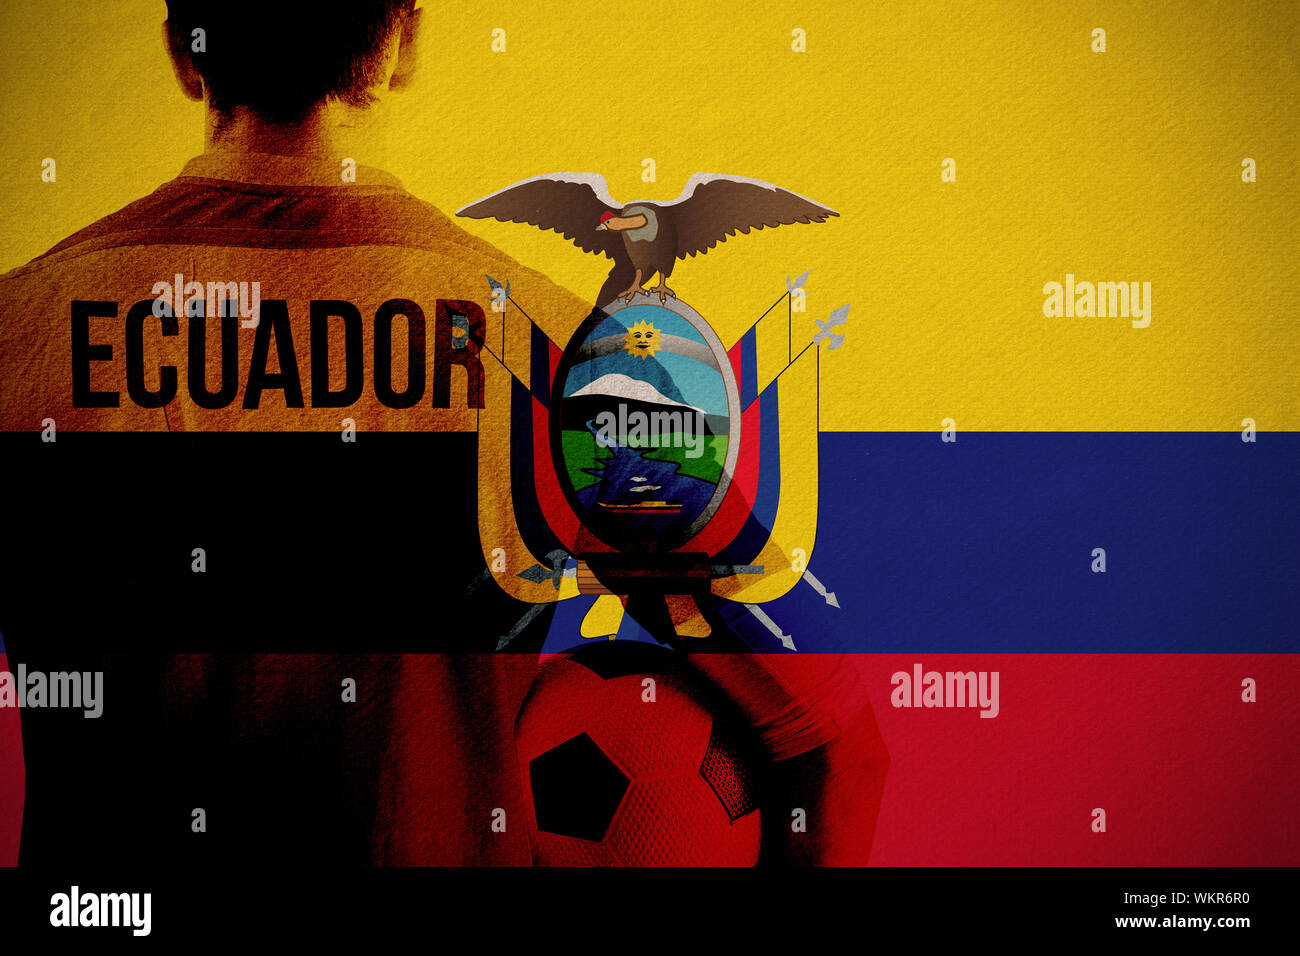 Ecuador football player holding ball against ecuador national flag Stock Photo